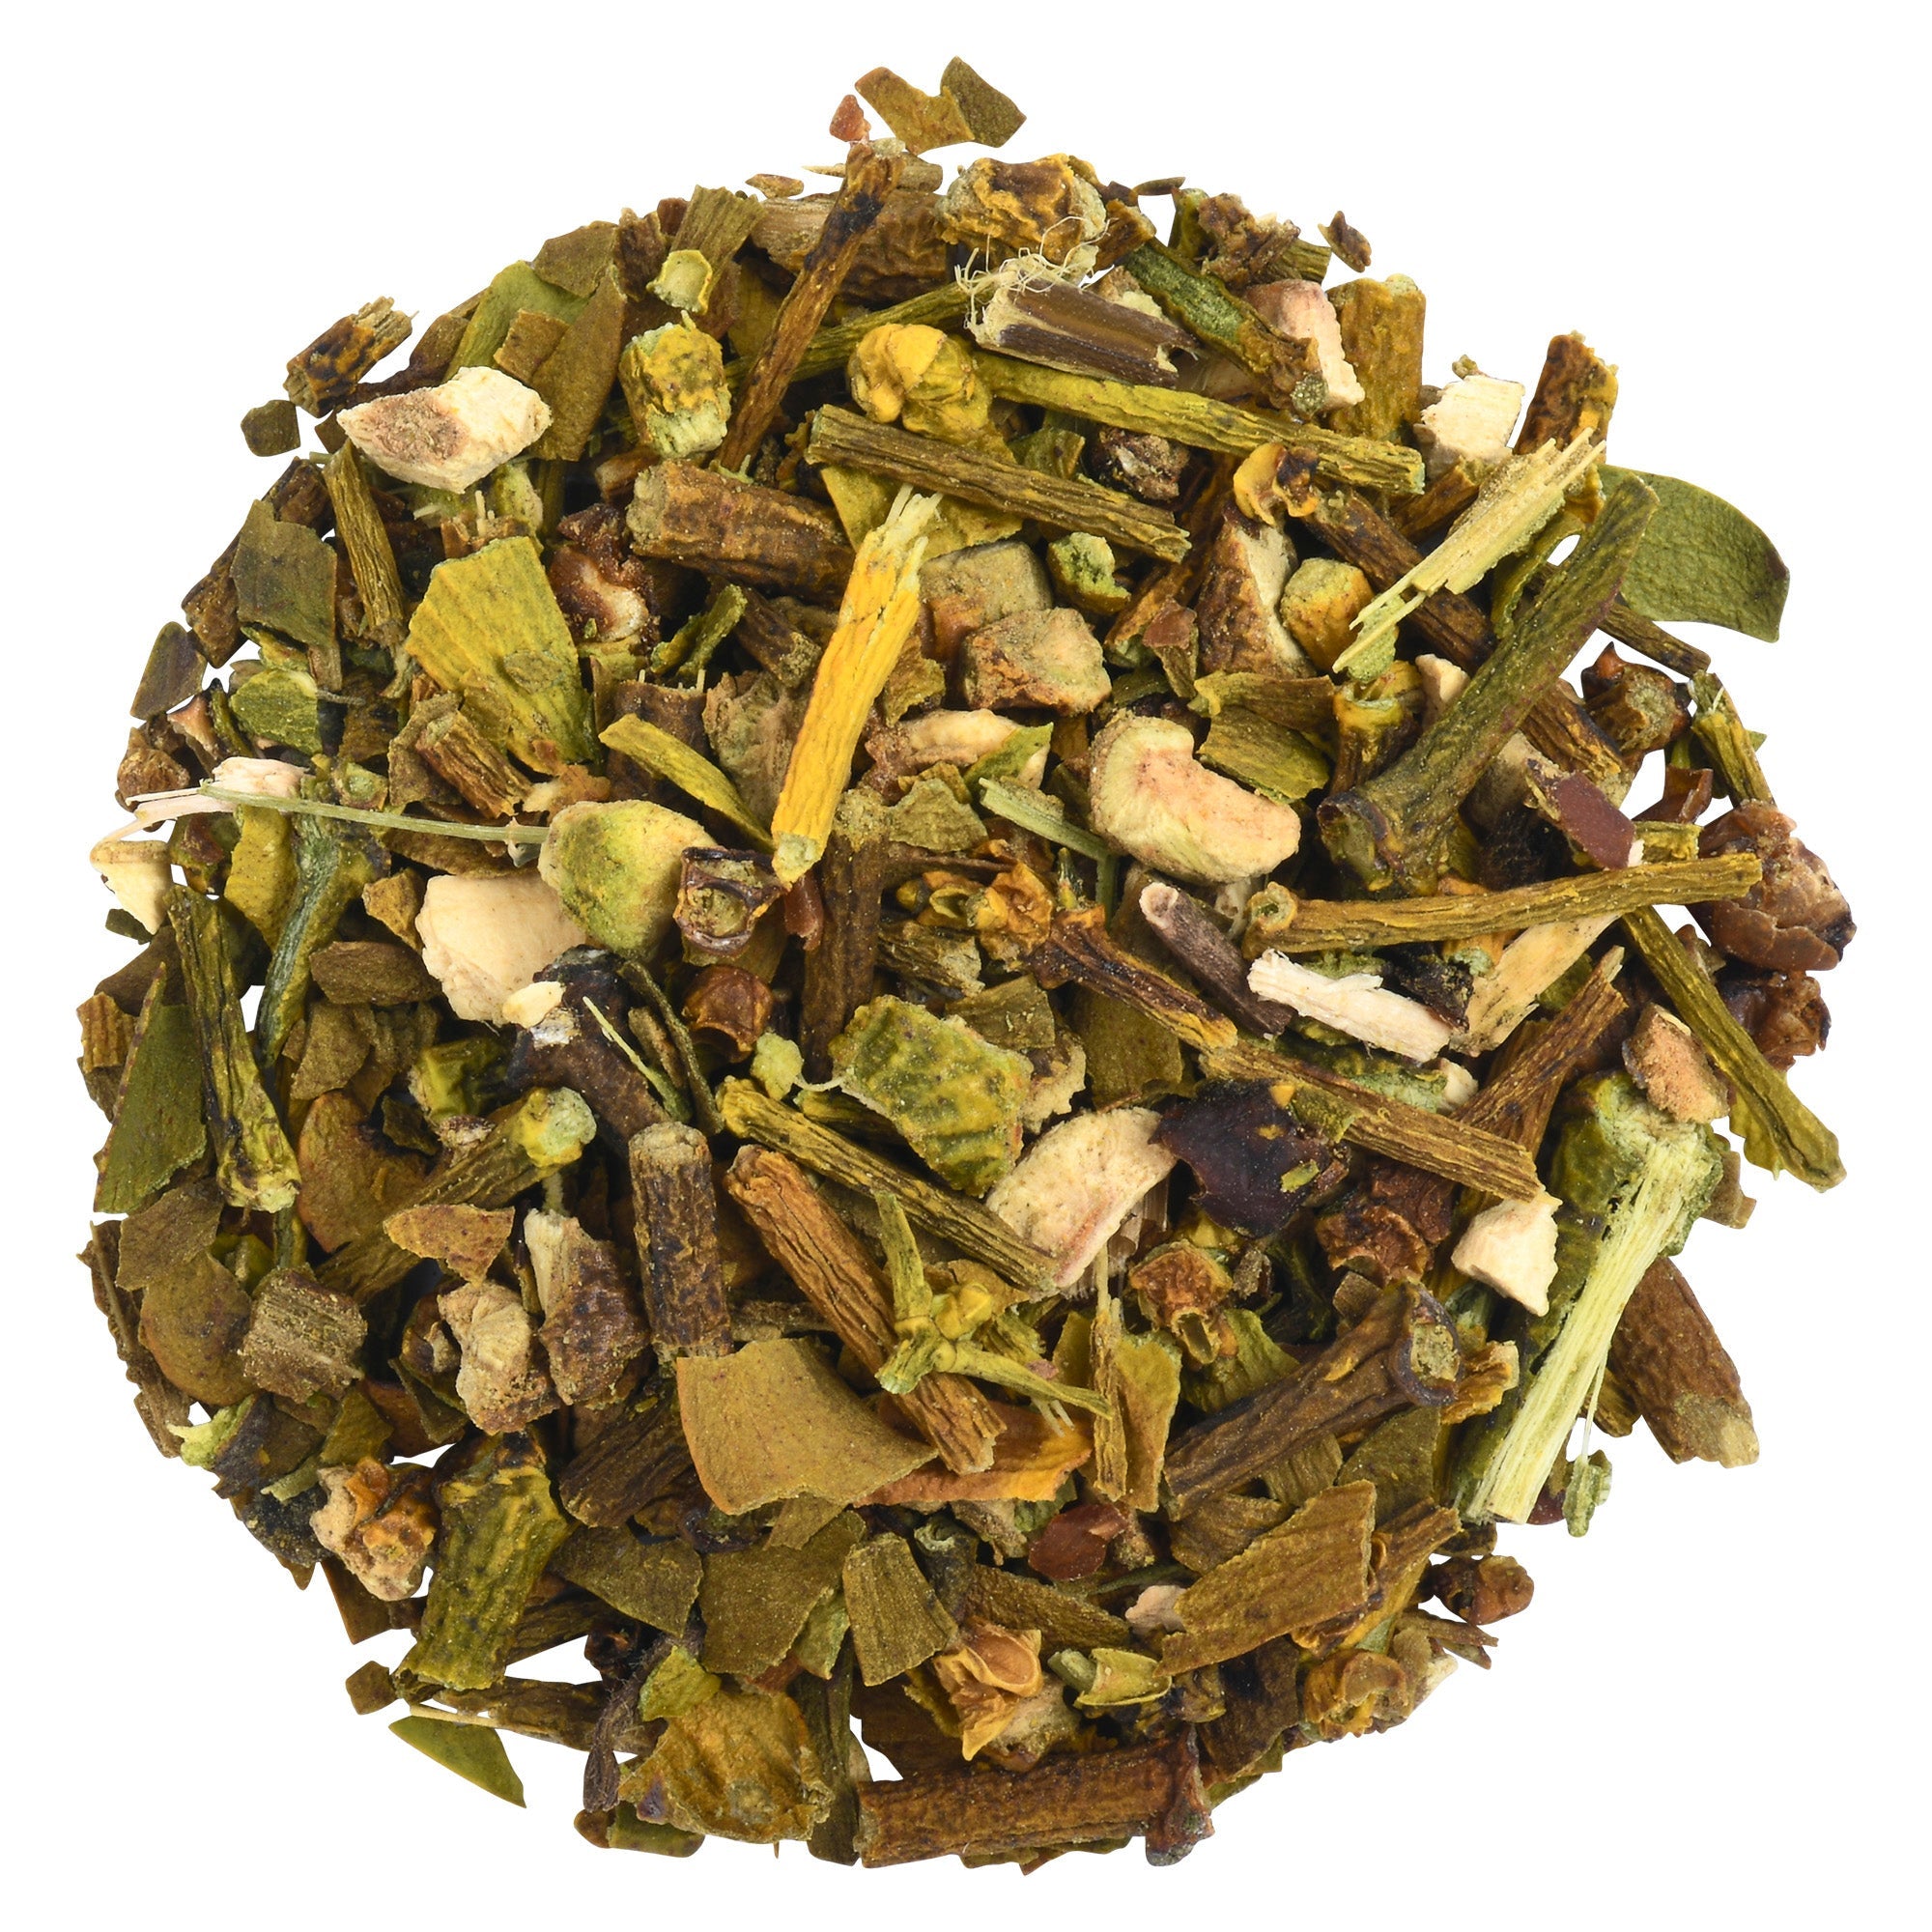 Mistletoe (Viscum Album) Organic Dried Herbal Tea